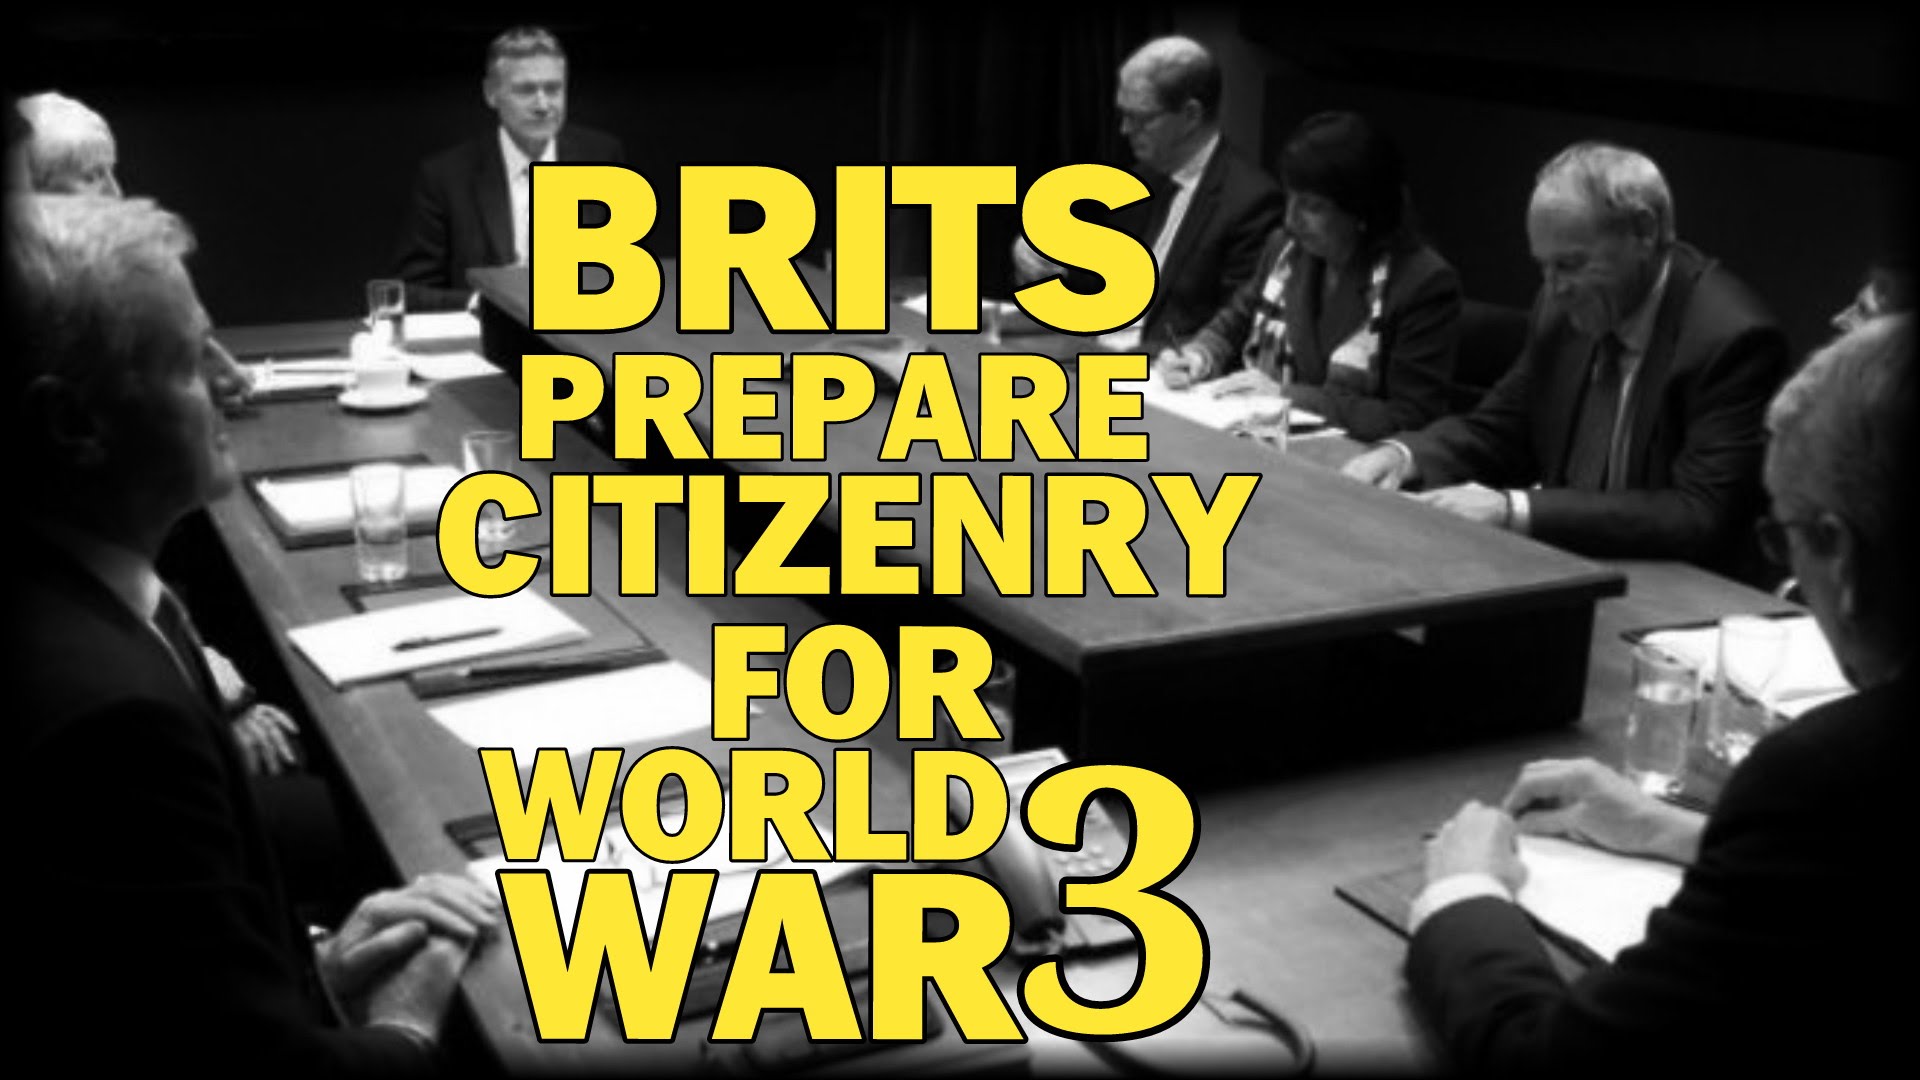 BRITS PREPARE CITIZENRY FOR WORLD WAR 3